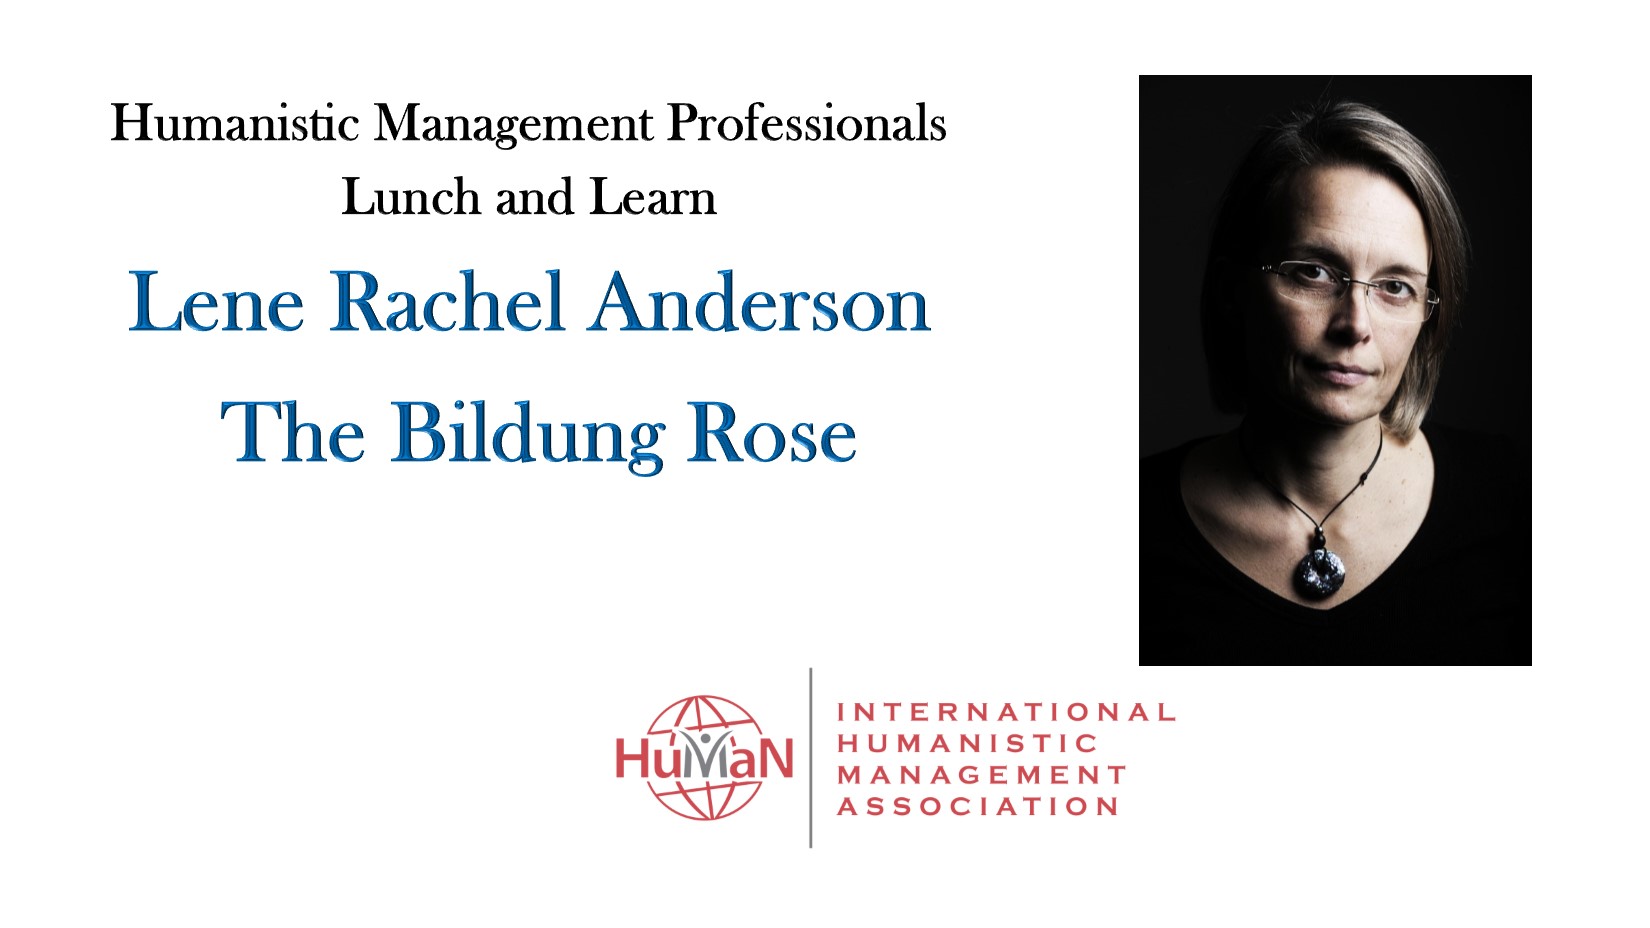 Lene Rachel Anderson on the Bildung Rose